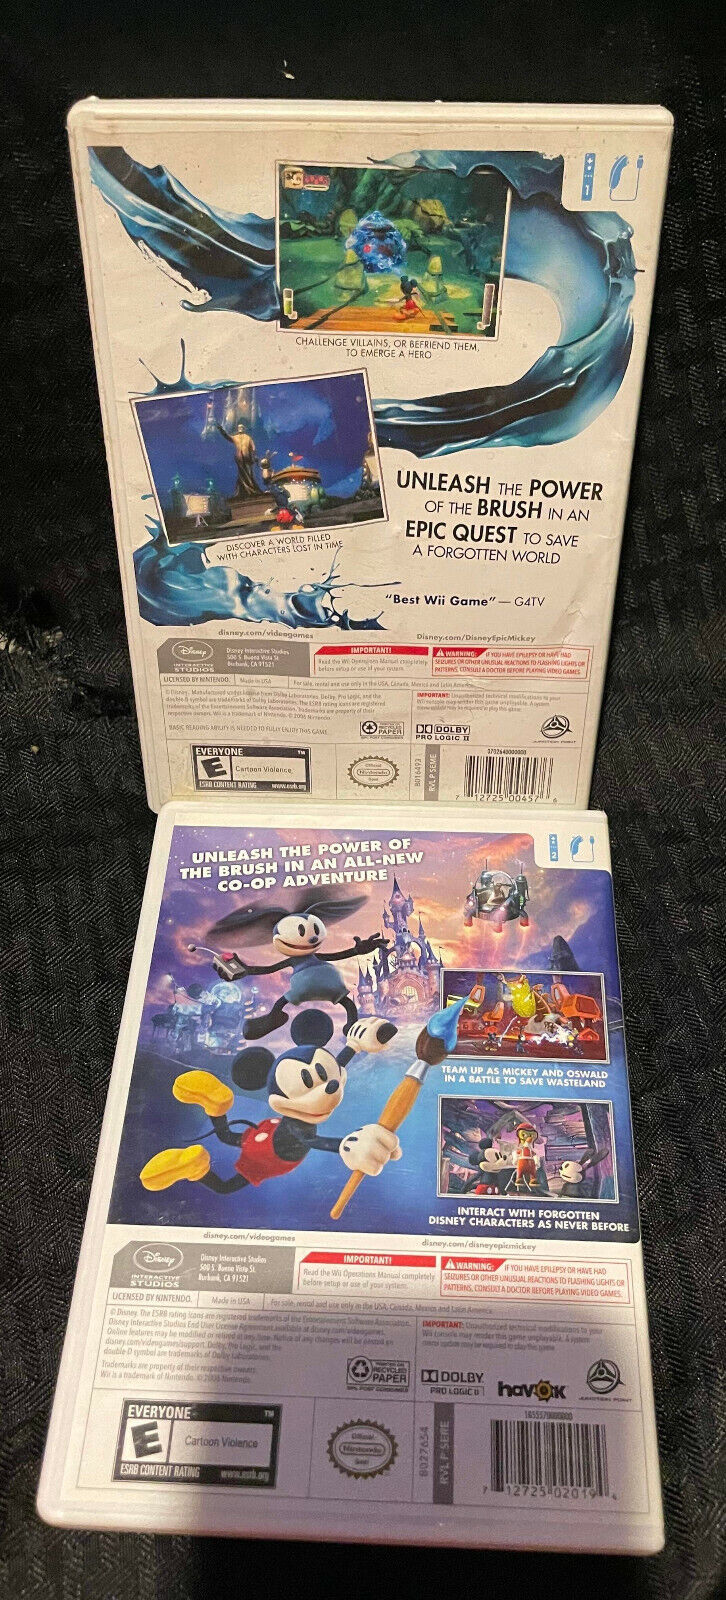 Disney Epic Mickey 1 & 2 Nintendo Wii Game Lot